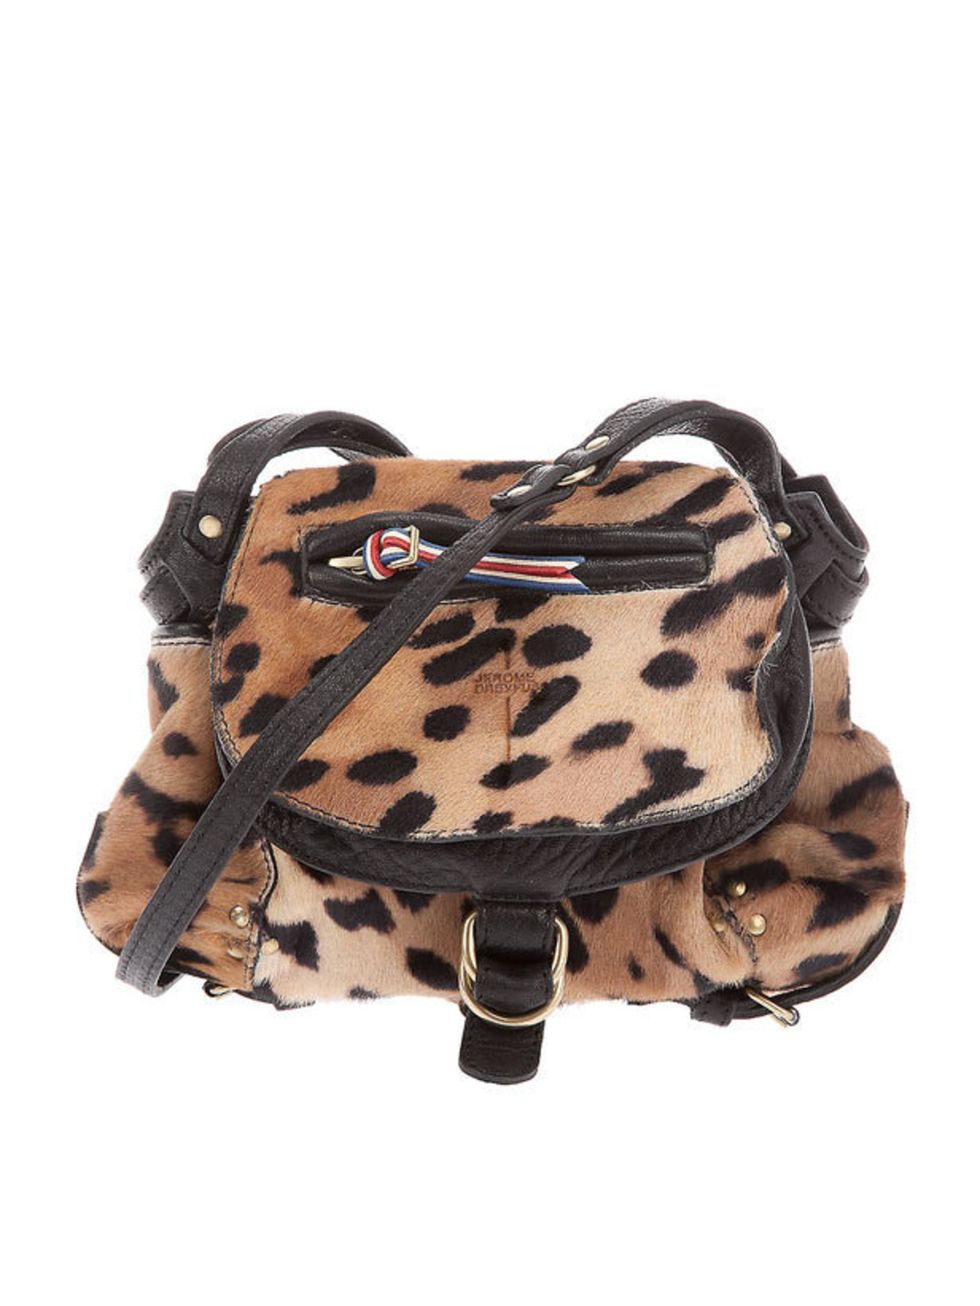 <p>Jerome Dreyfuss leopard print bag, £599, at <a href="http://www.farfetch.com/shopping/women/designer-jerome-dreyfuss/item10072810.aspx">Farfetch</a></p>